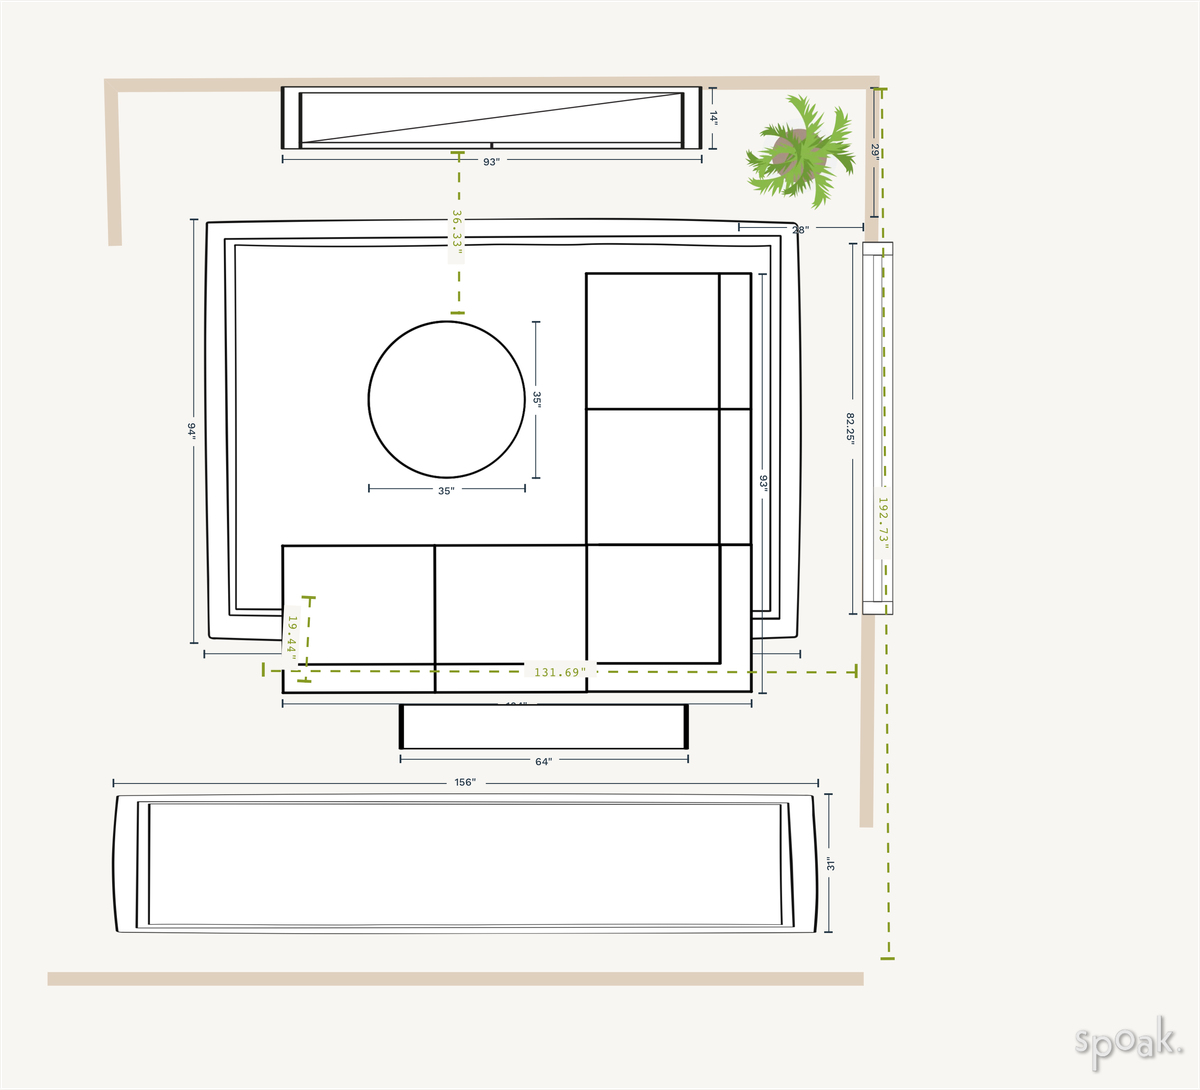 Kitchen + Living Room Floor Plan designed by Amy Brune